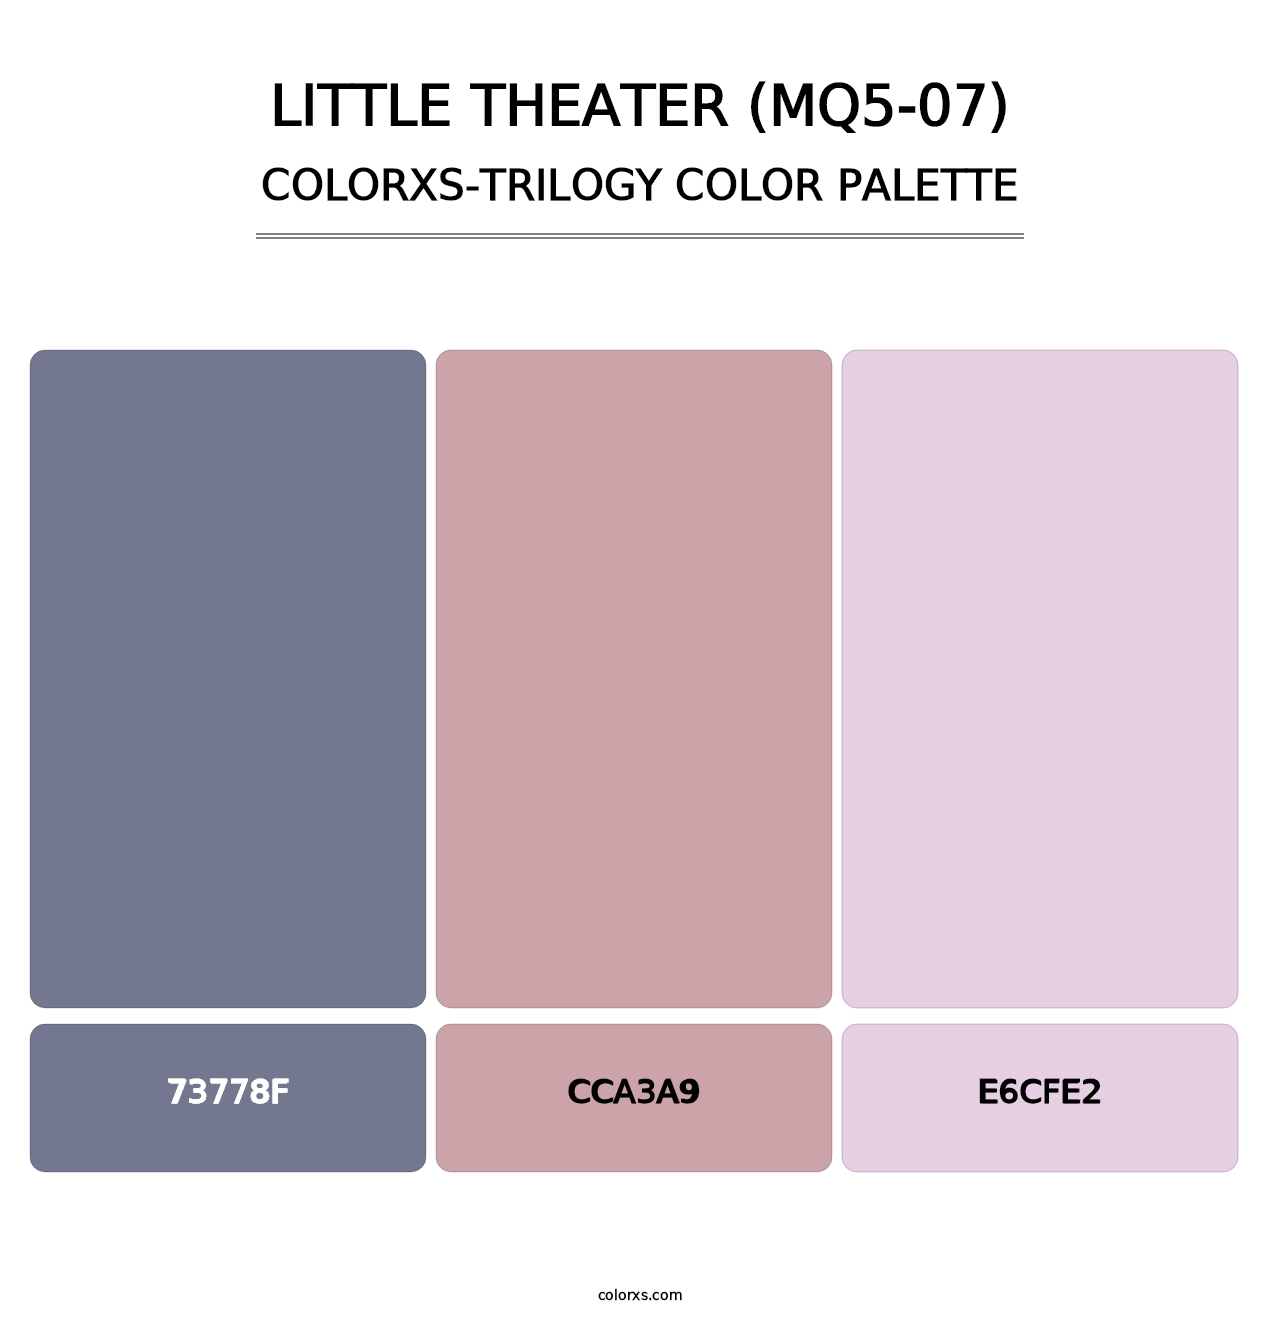 Little Theater (MQ5-07) - Colorxs Trilogy Palette